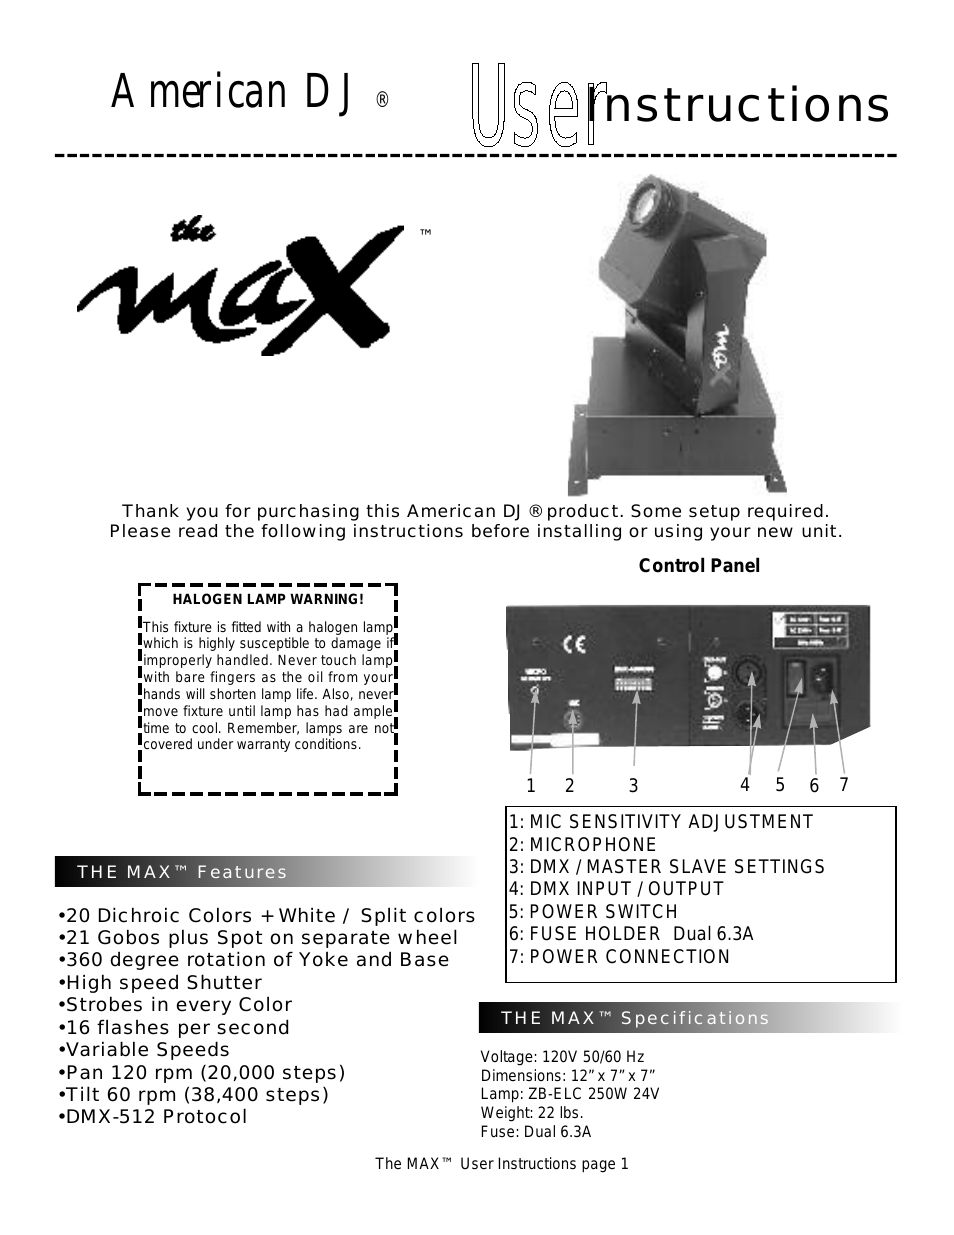 the Max